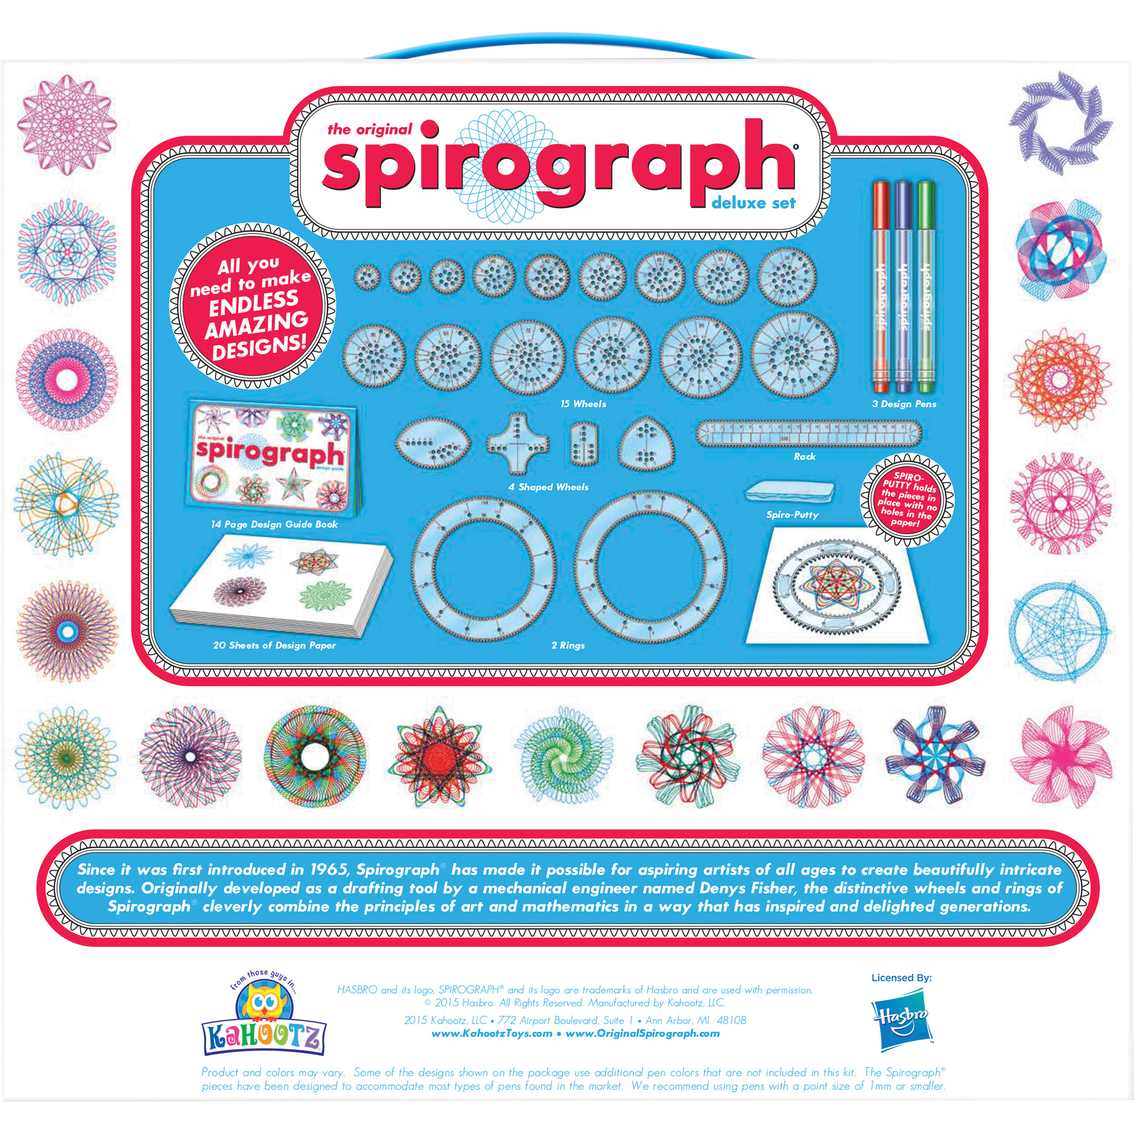 Spirograph Classic Cyclex Spiral Drawing Art Tool Kit